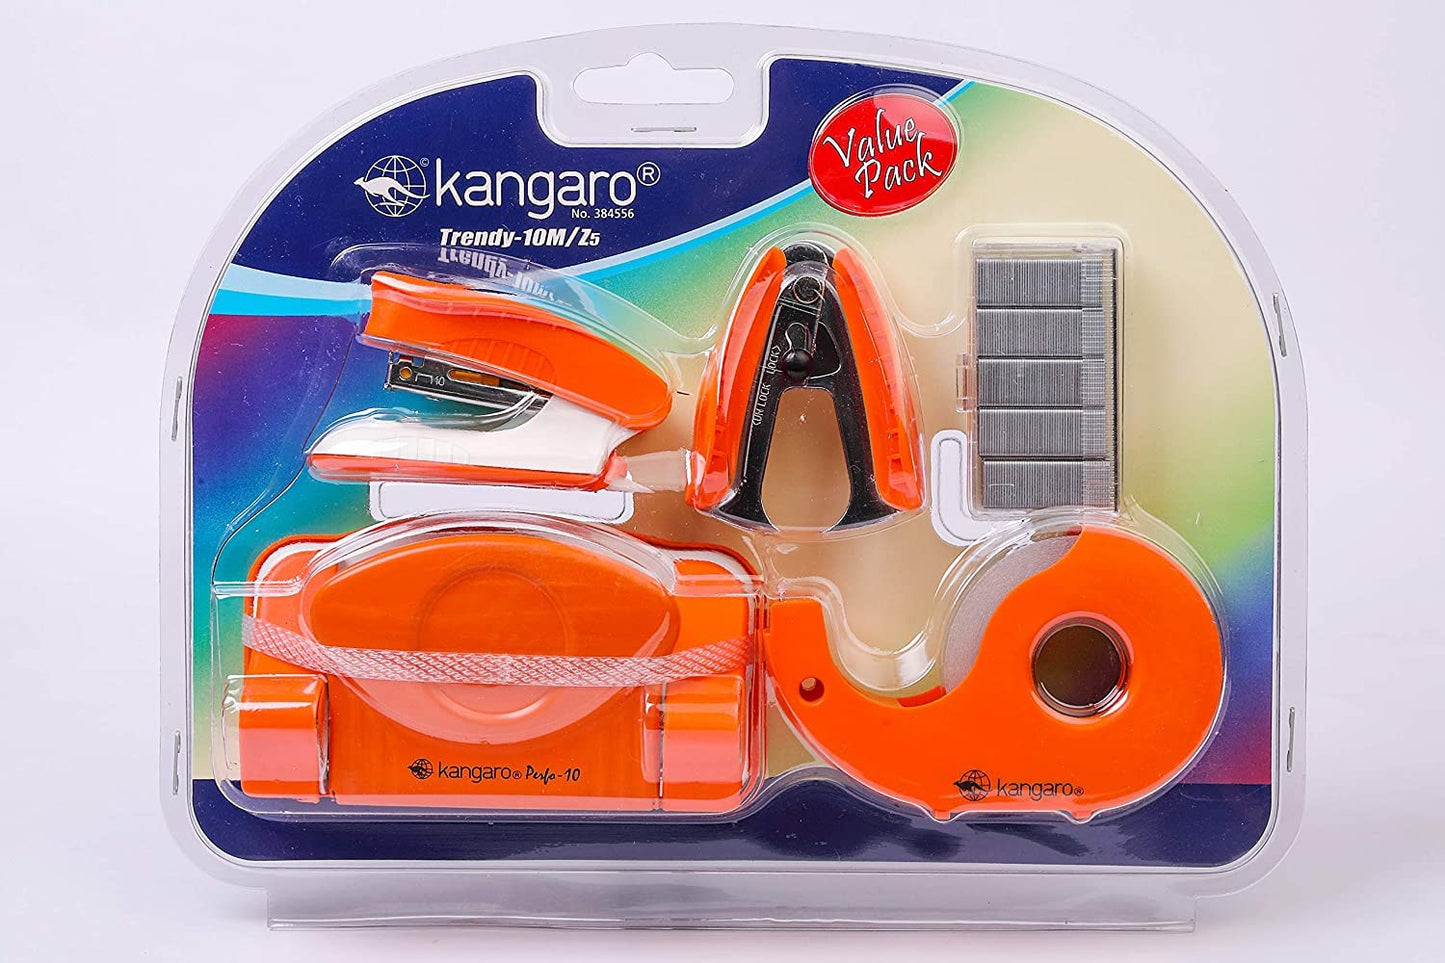 Kangaro /Sets Trendy-10/Z5 - Color May Vary